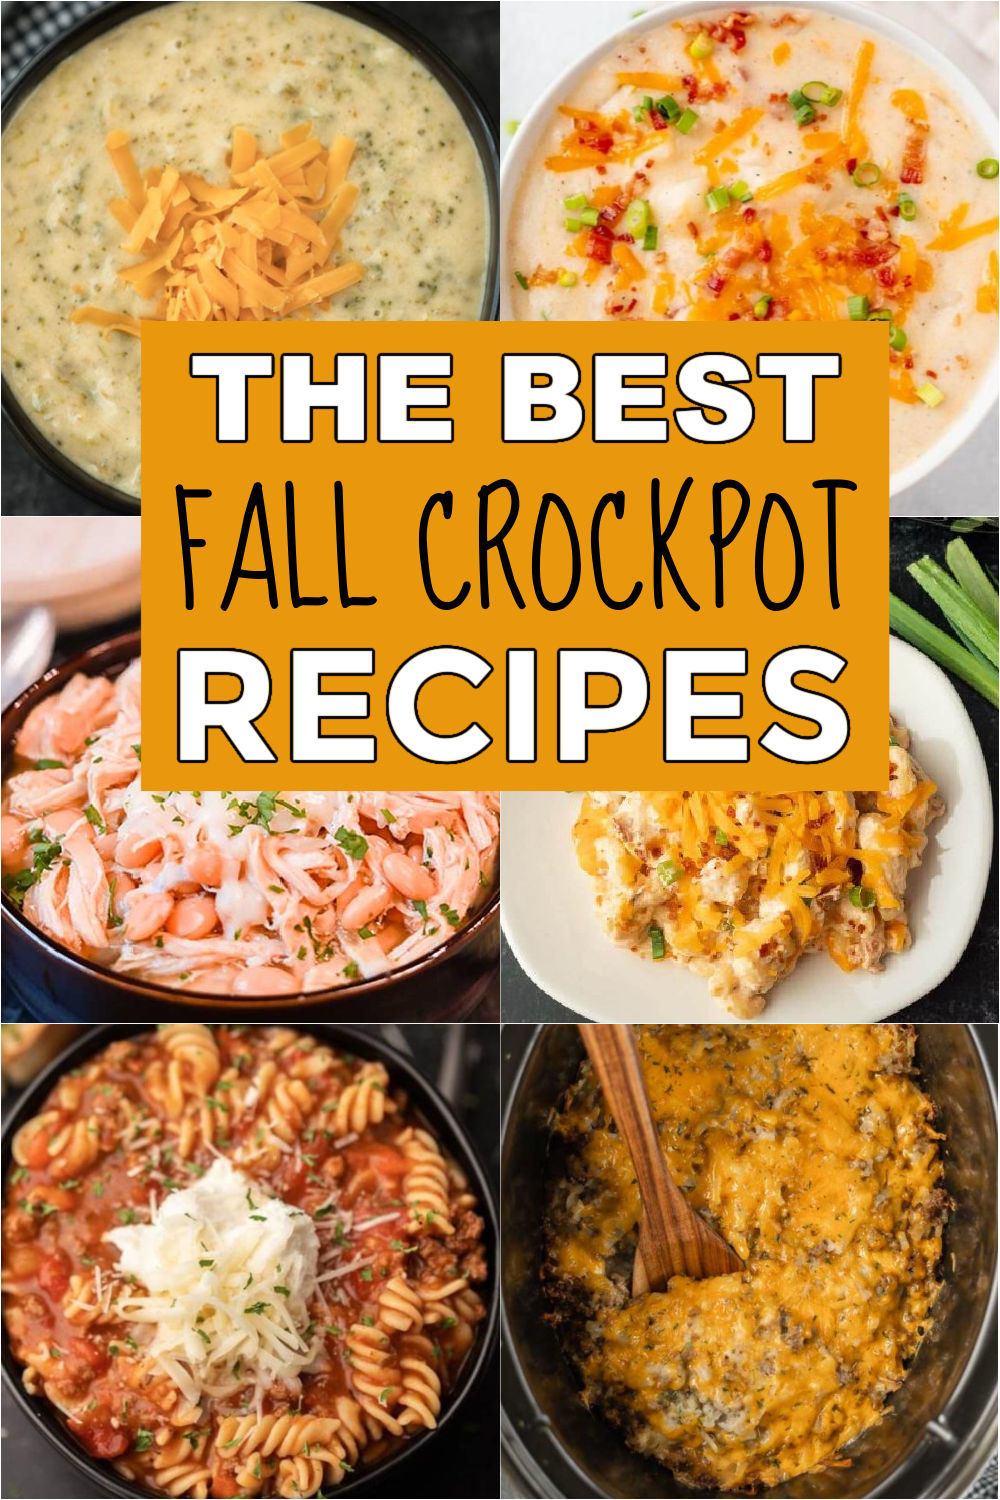 https://www.eatingonadime.com/wp-content/uploads/2022/07/Fall-Crockpot-Recipes-Pin-1-1.jpg